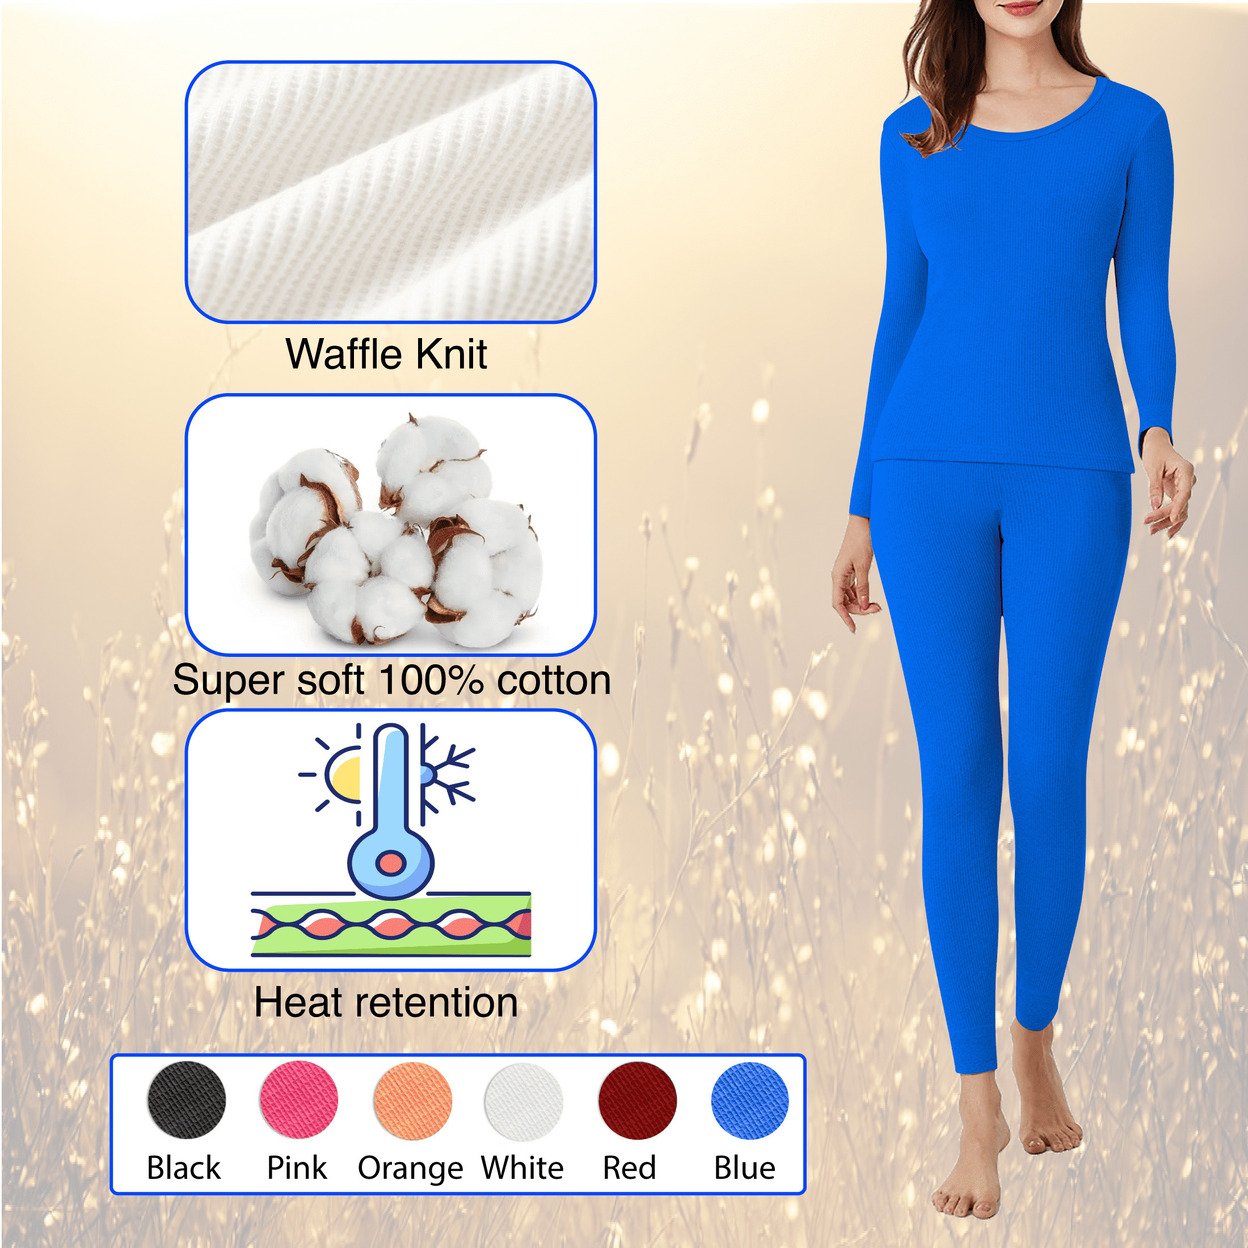 2-Piece: Women's Ultra Soft Cotton Waffle Knit Thermal Sets - Blue, Medium